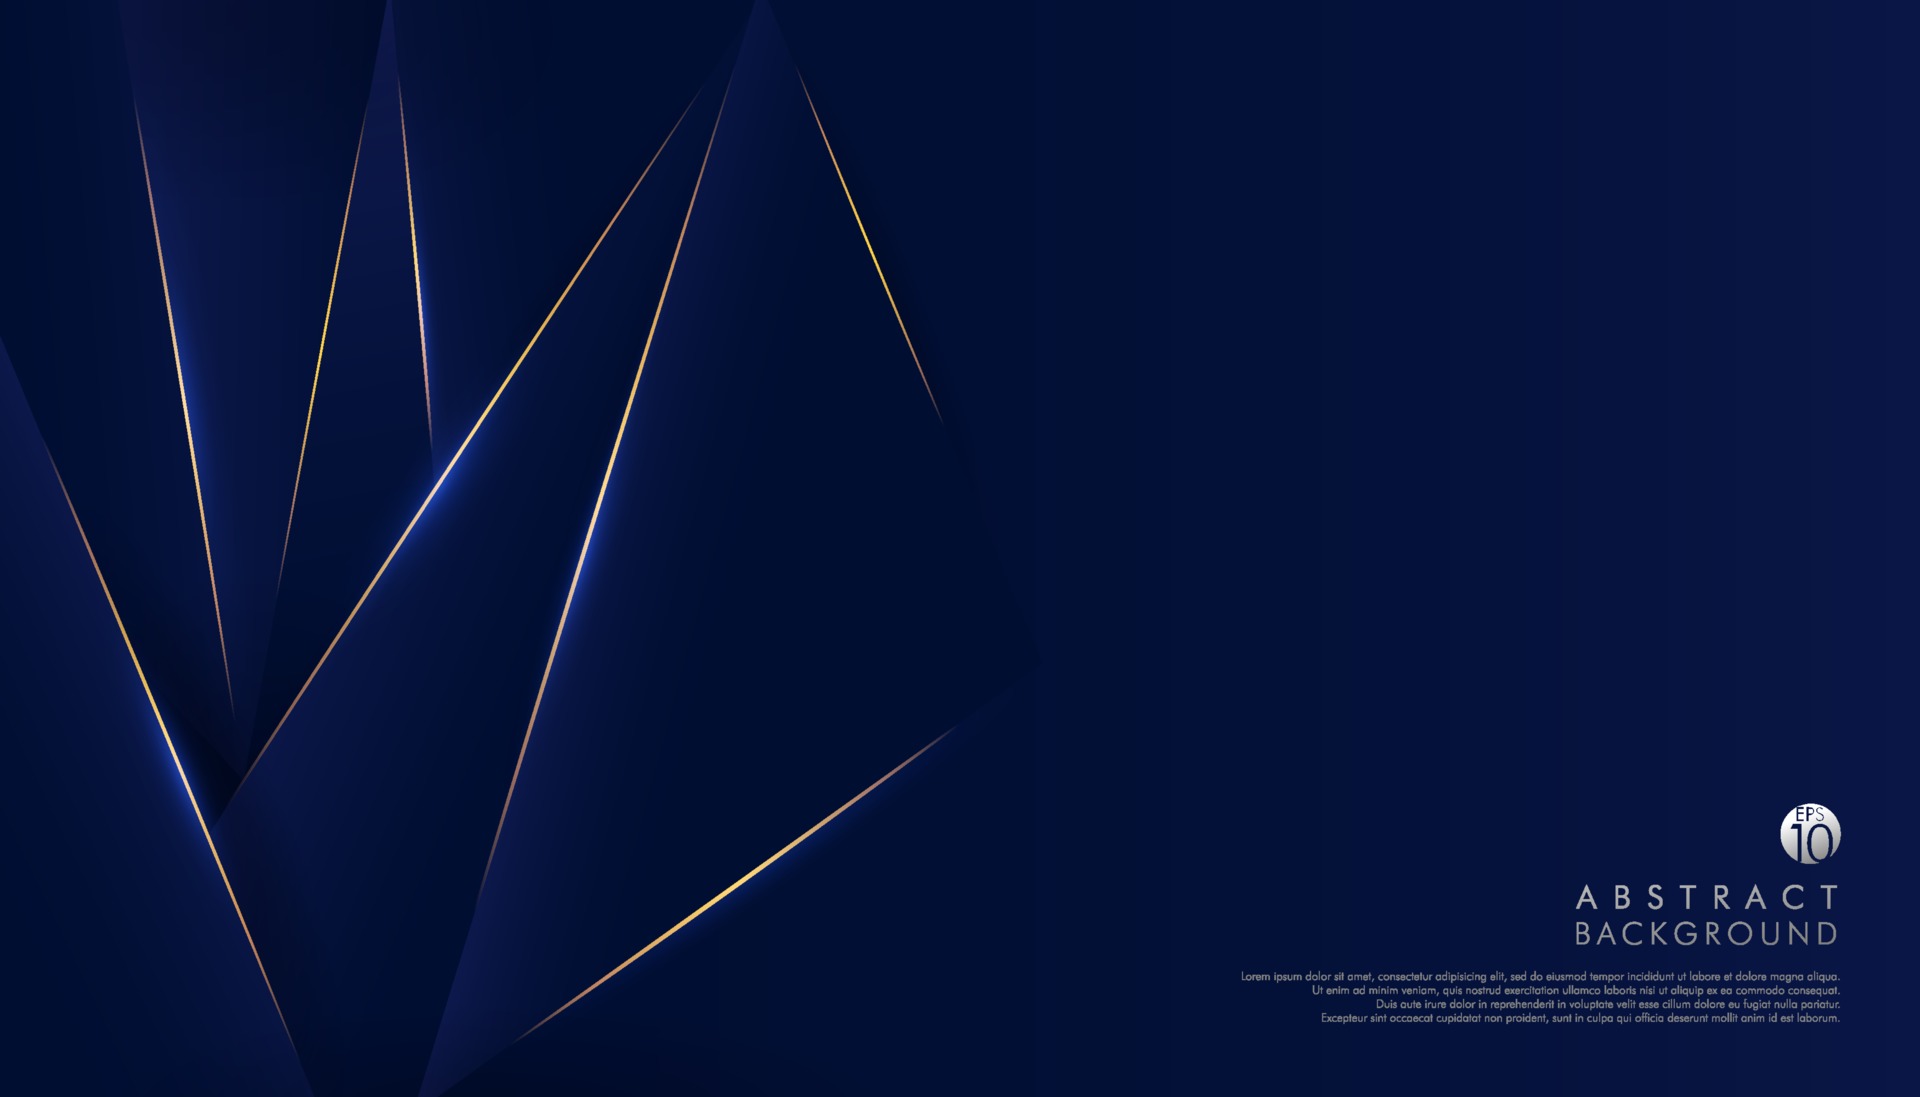 Abstract Dark Navy Blue Premium Background With Luxury Triangles